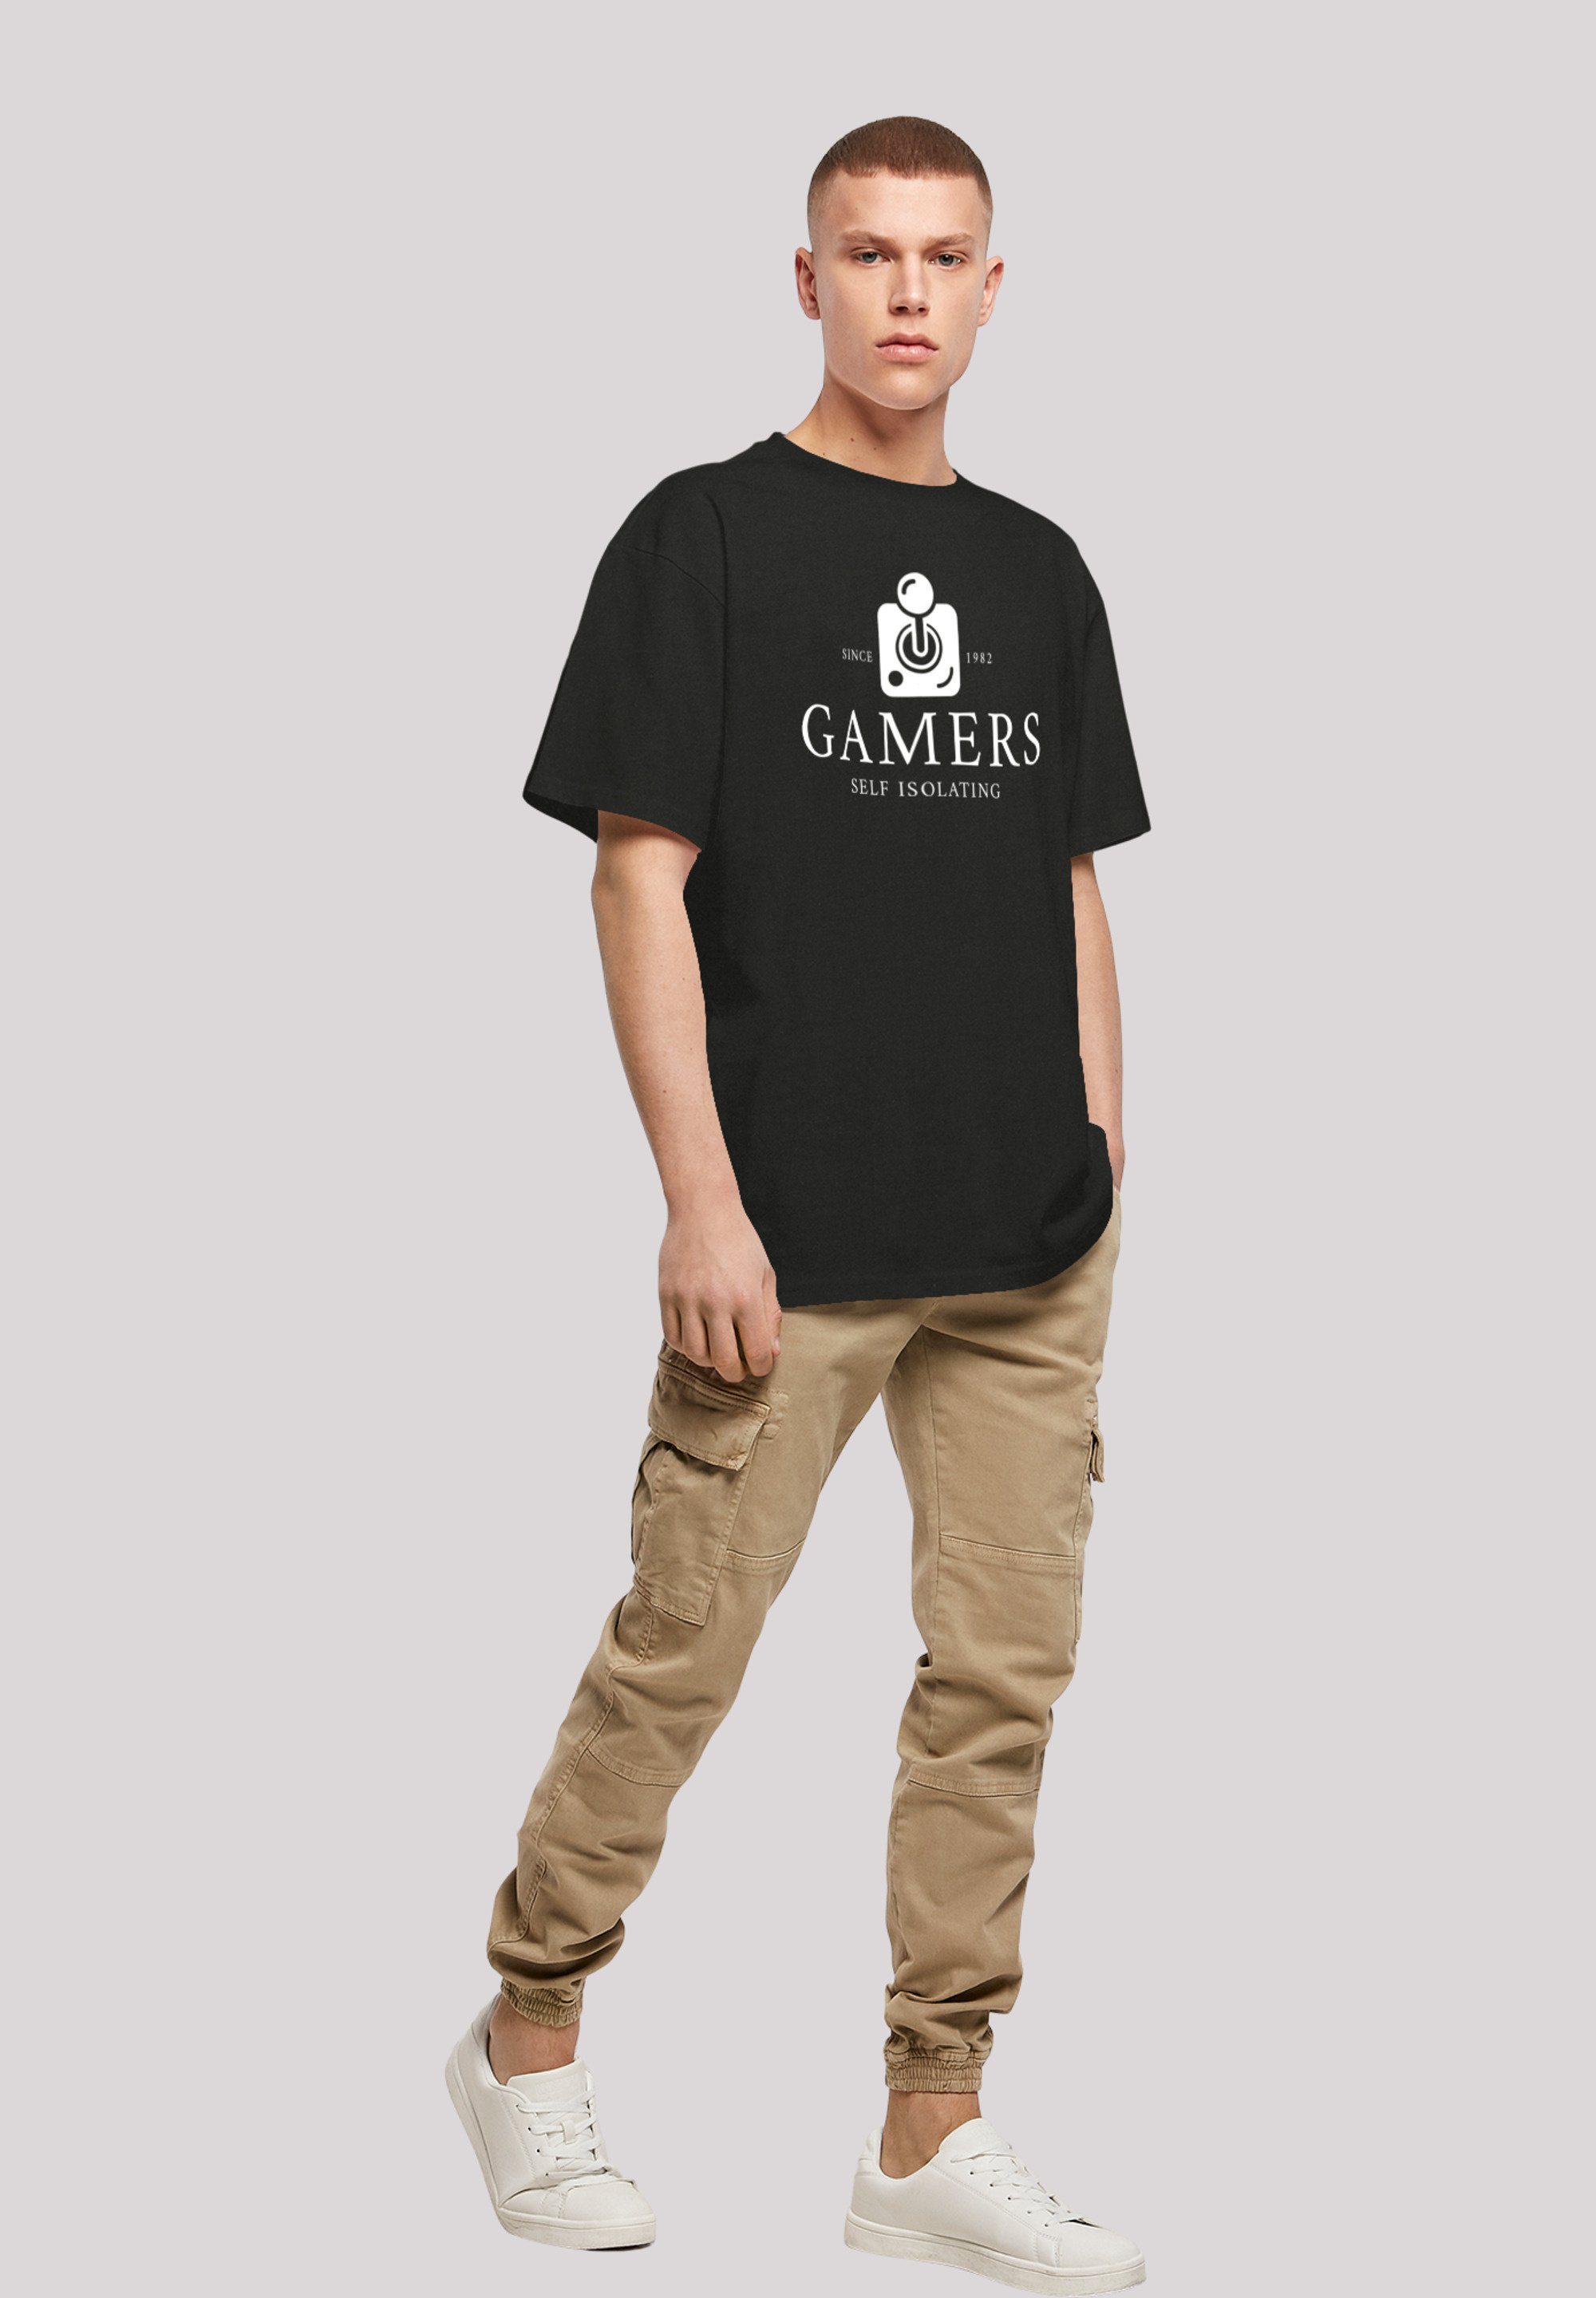 Gamers schwarz SEVENSQUARED Retro Print Self T-Shirt Isolating F4NT4STIC Gaming